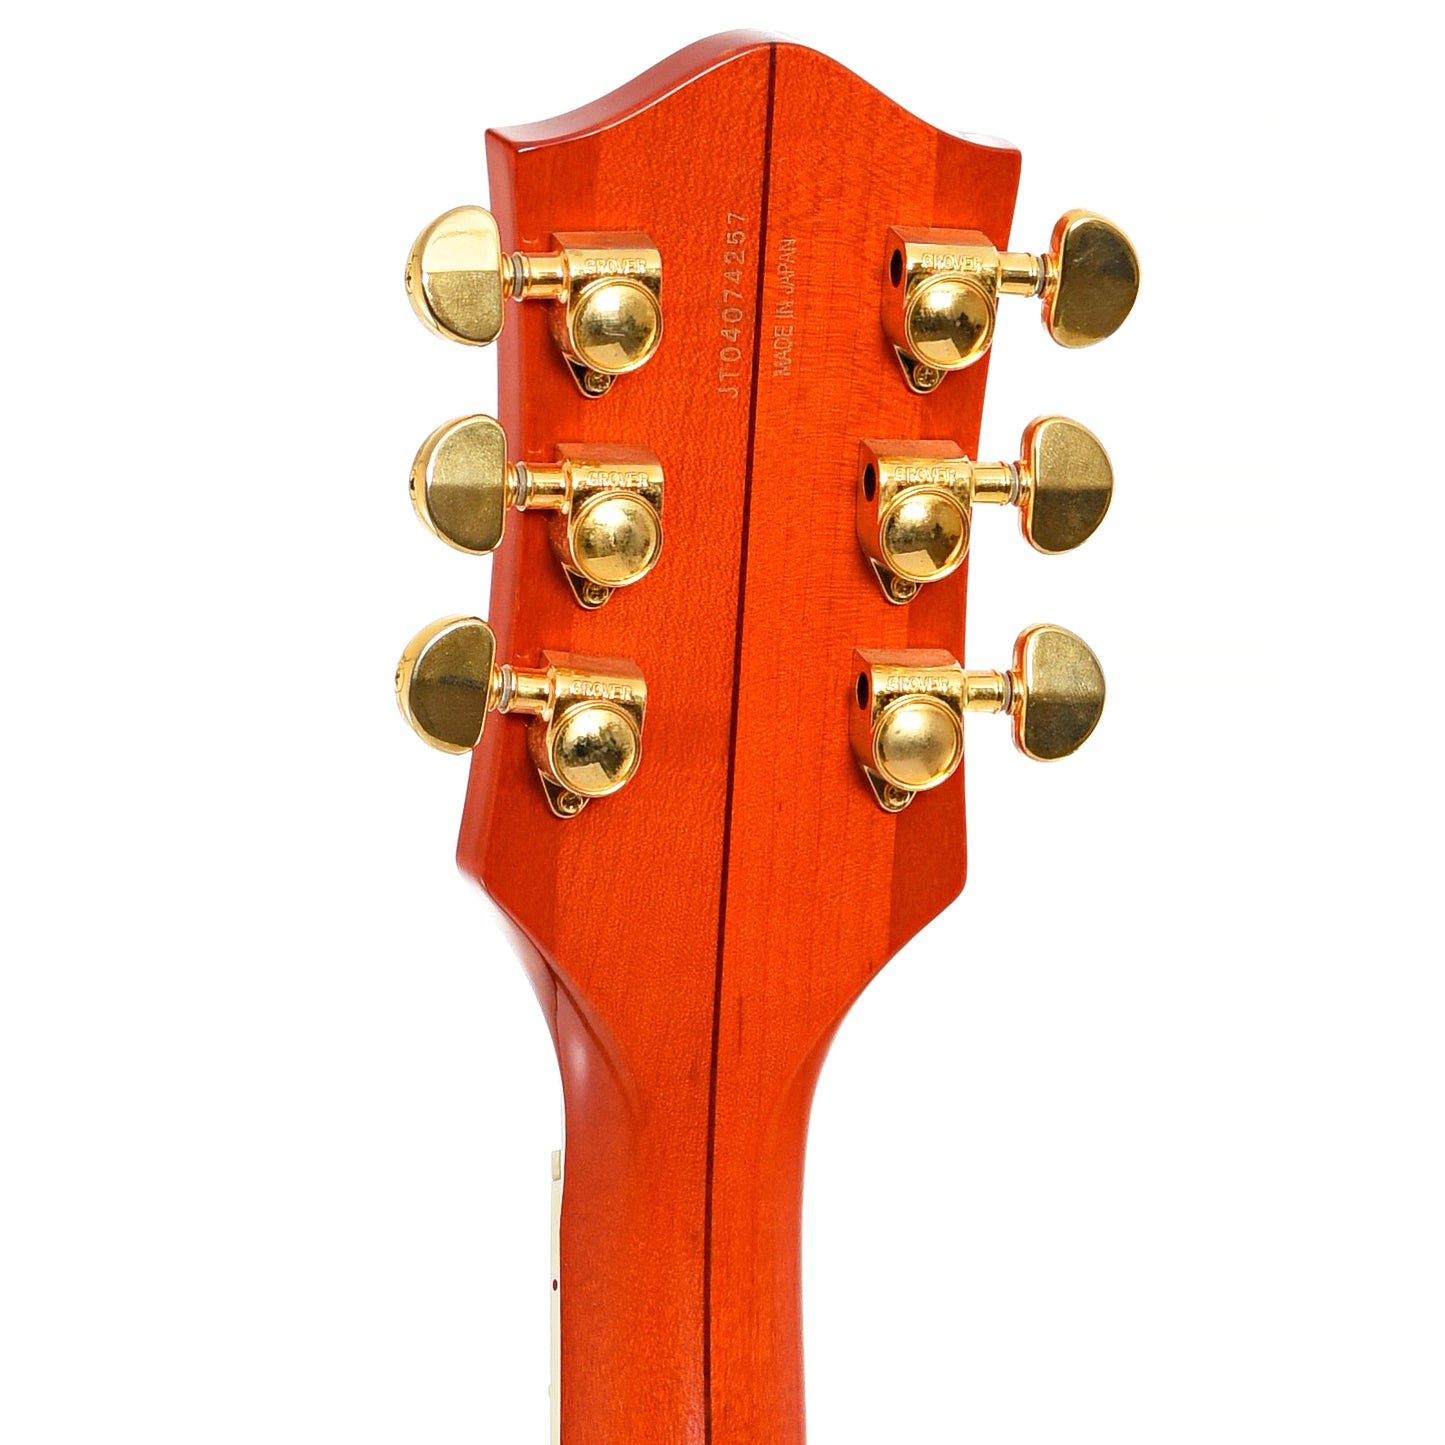 Back headstock of Gretsch G6120 LH Hollowbody Electric Guitar